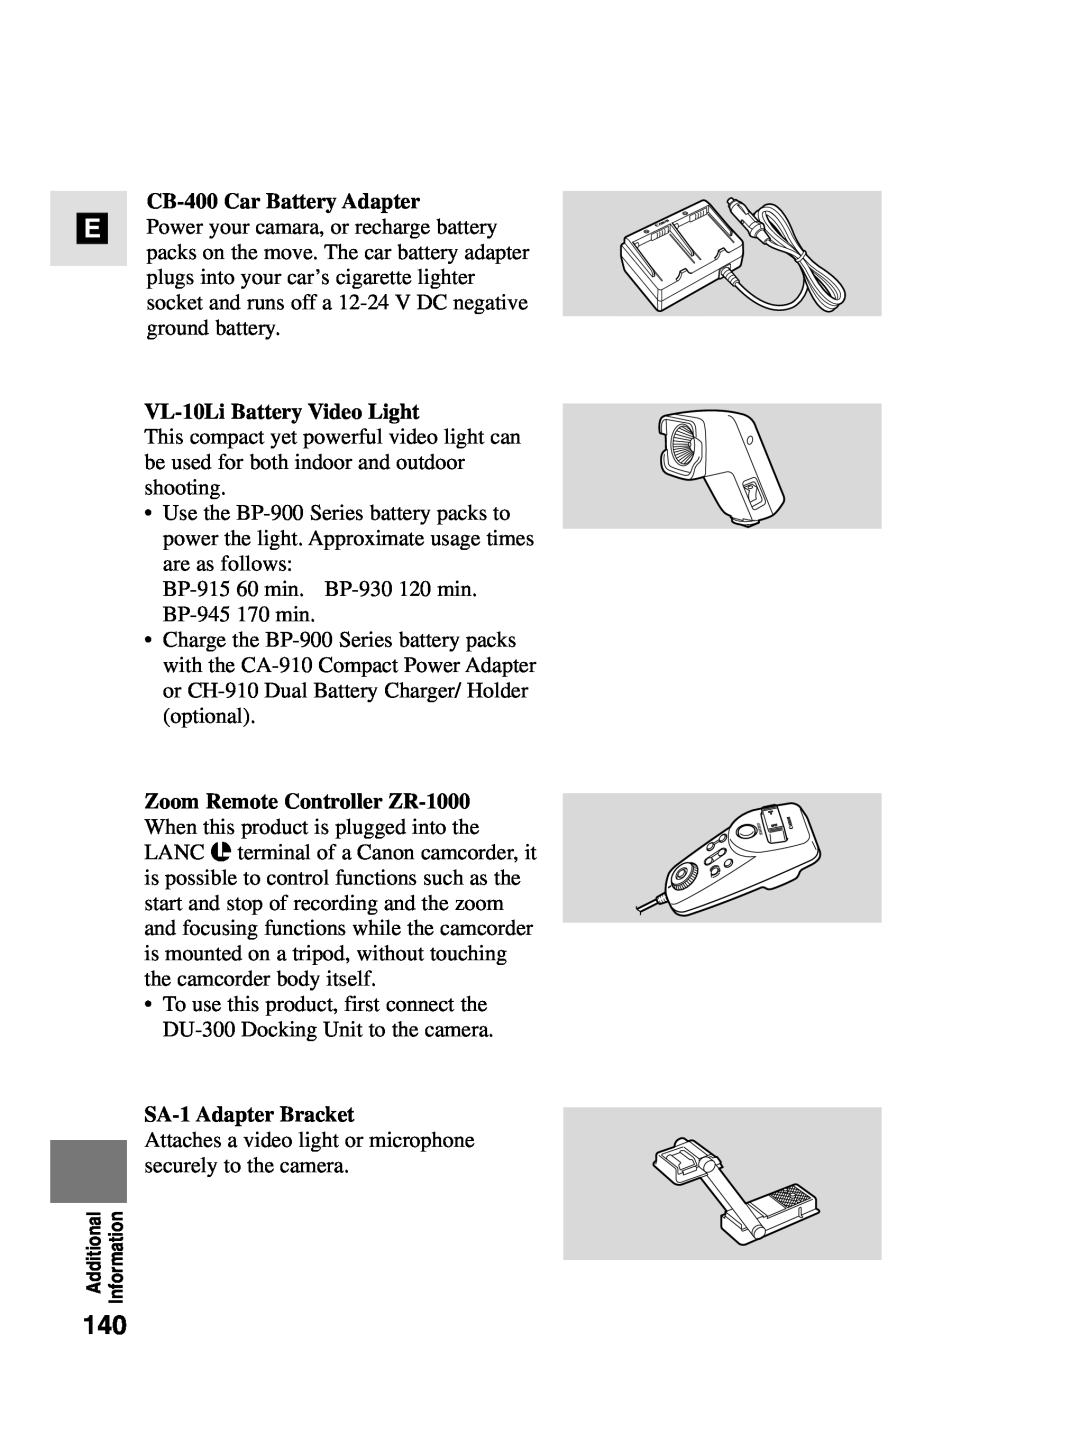 Canon MV4i MC instruction manual CB-400 Car Battery Adapter, VL-10Li Battery Video Light, SA-1 Adapter Bracket 